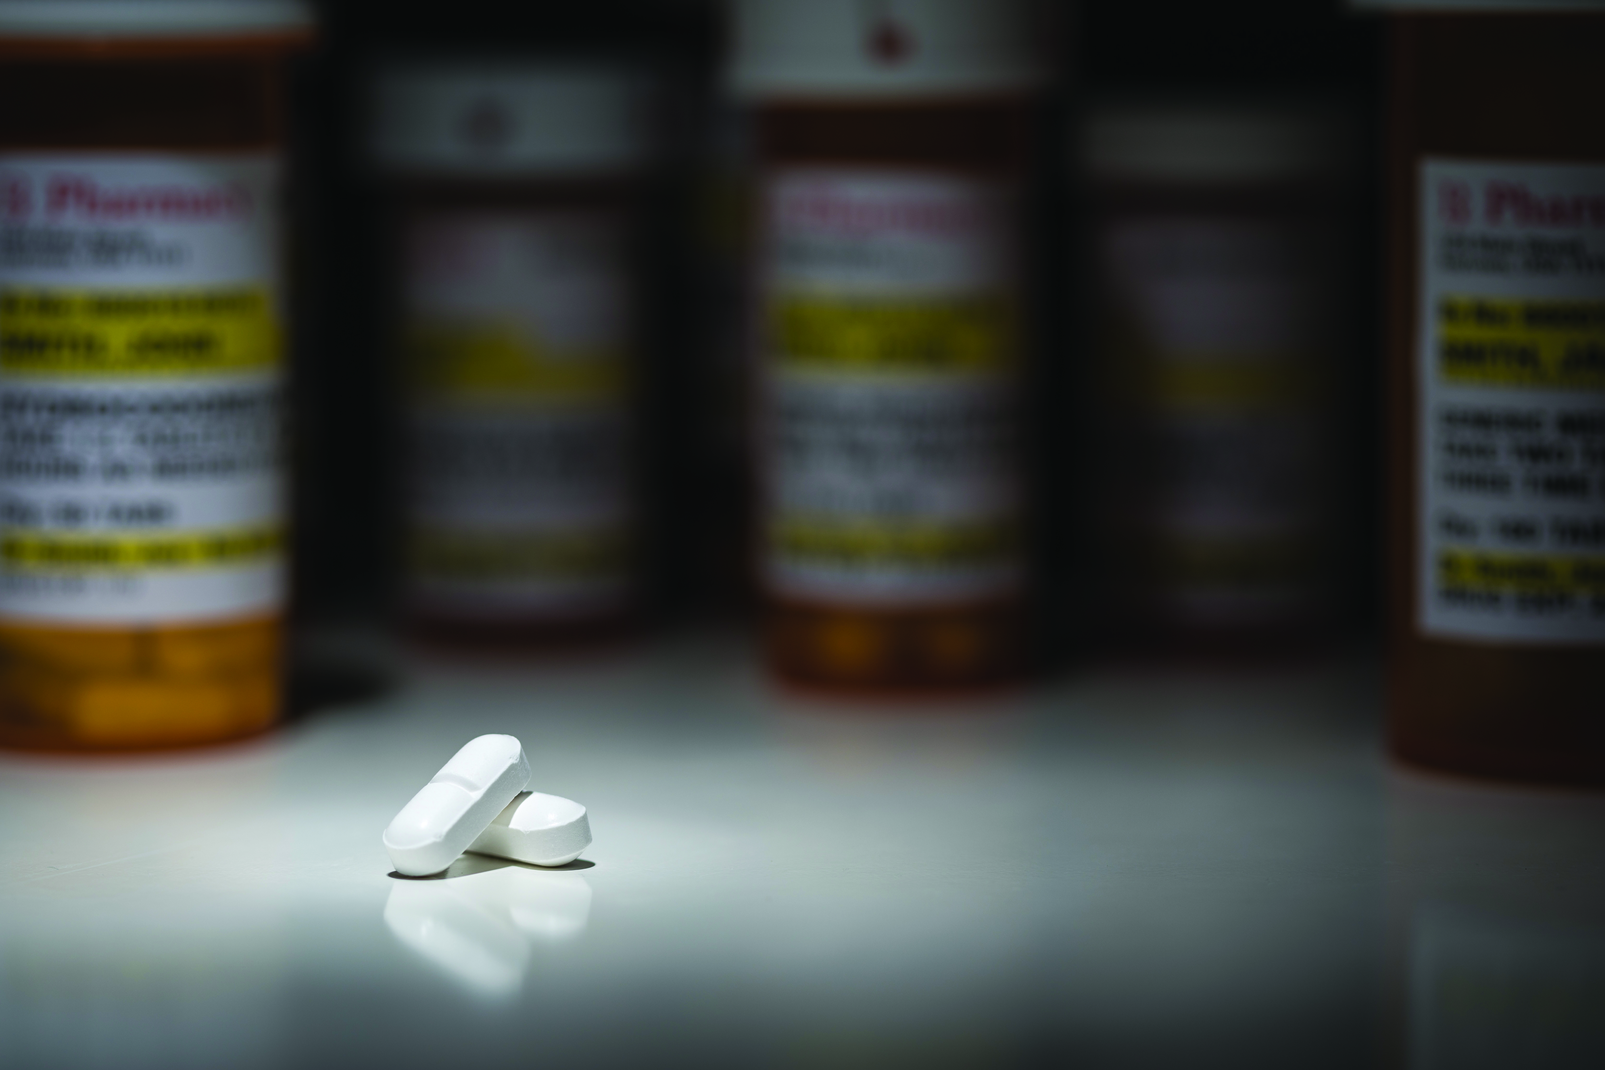 Locking Prescription Vials Helps Keep Medicine Safe in Medication-assisted Treatment Programs